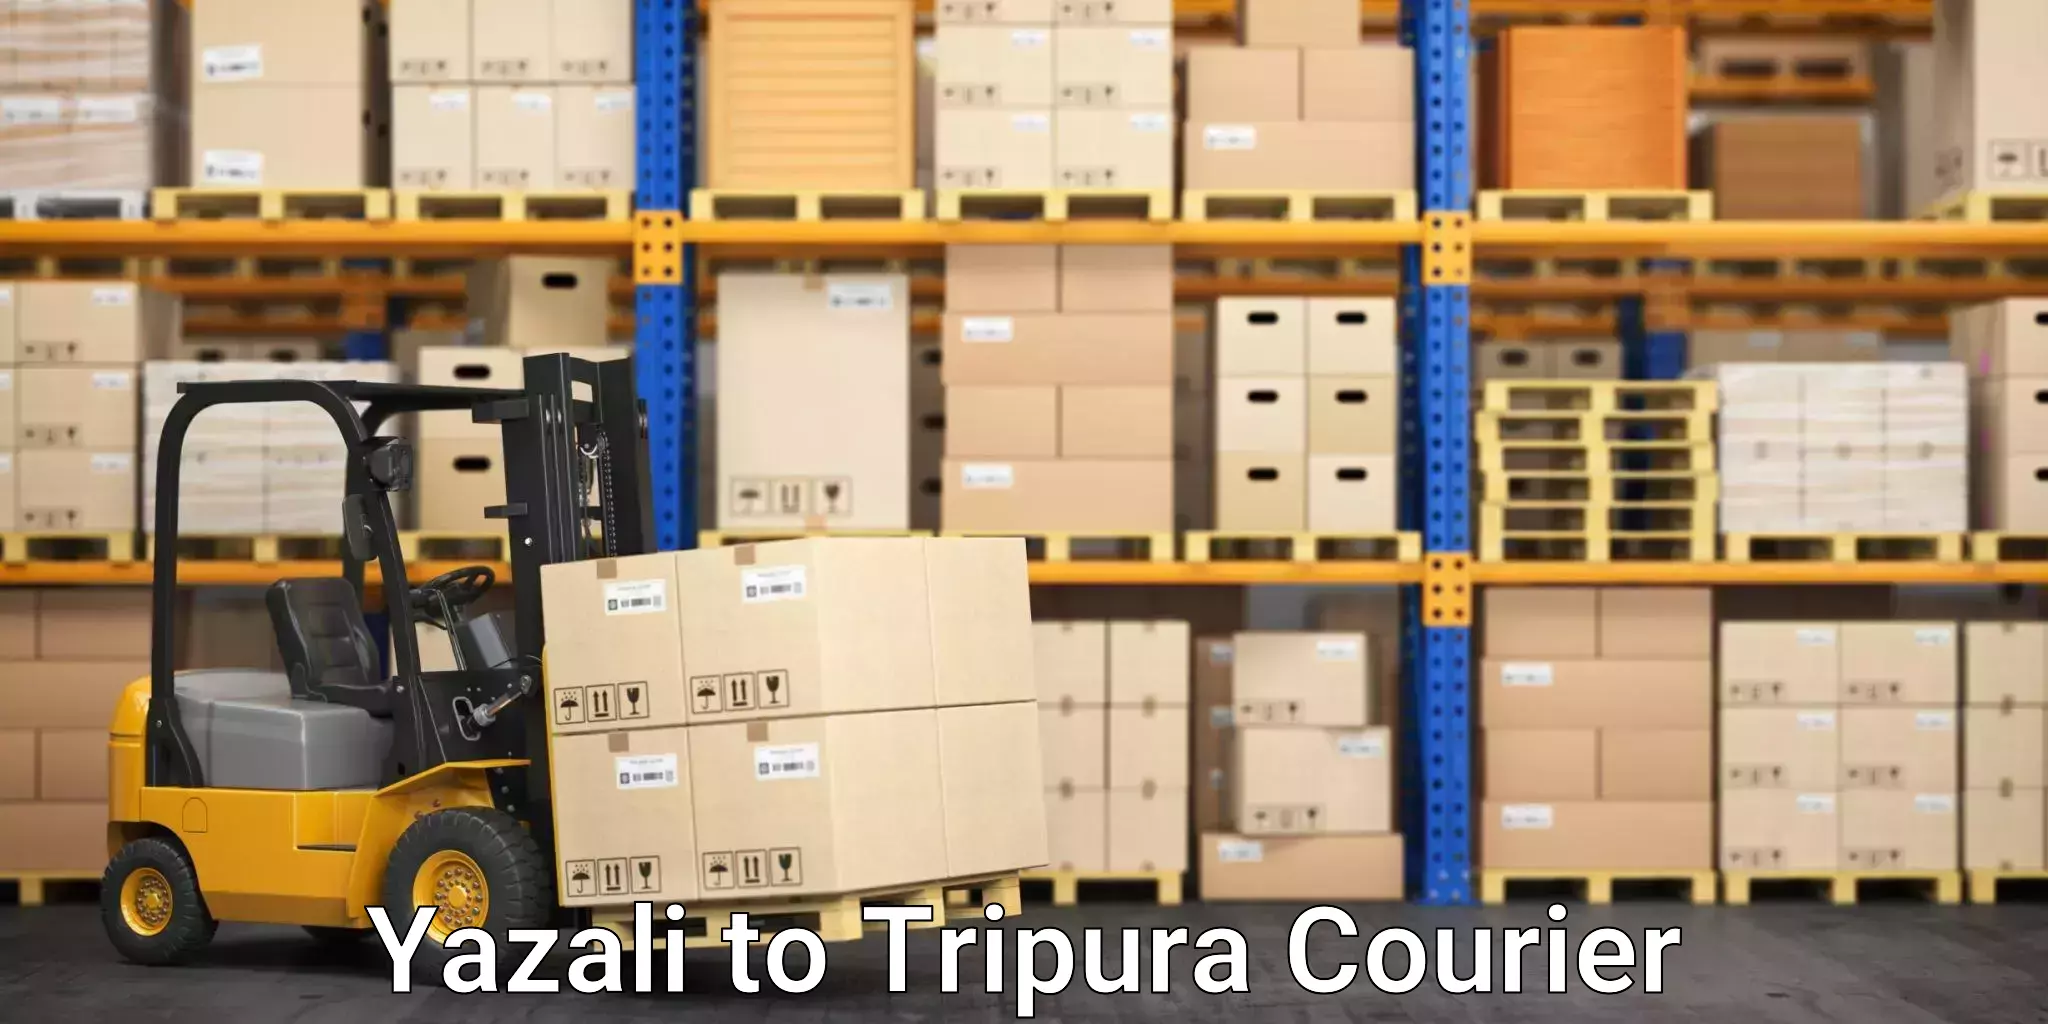 Efficient order fulfillment in Yazali to Tripura